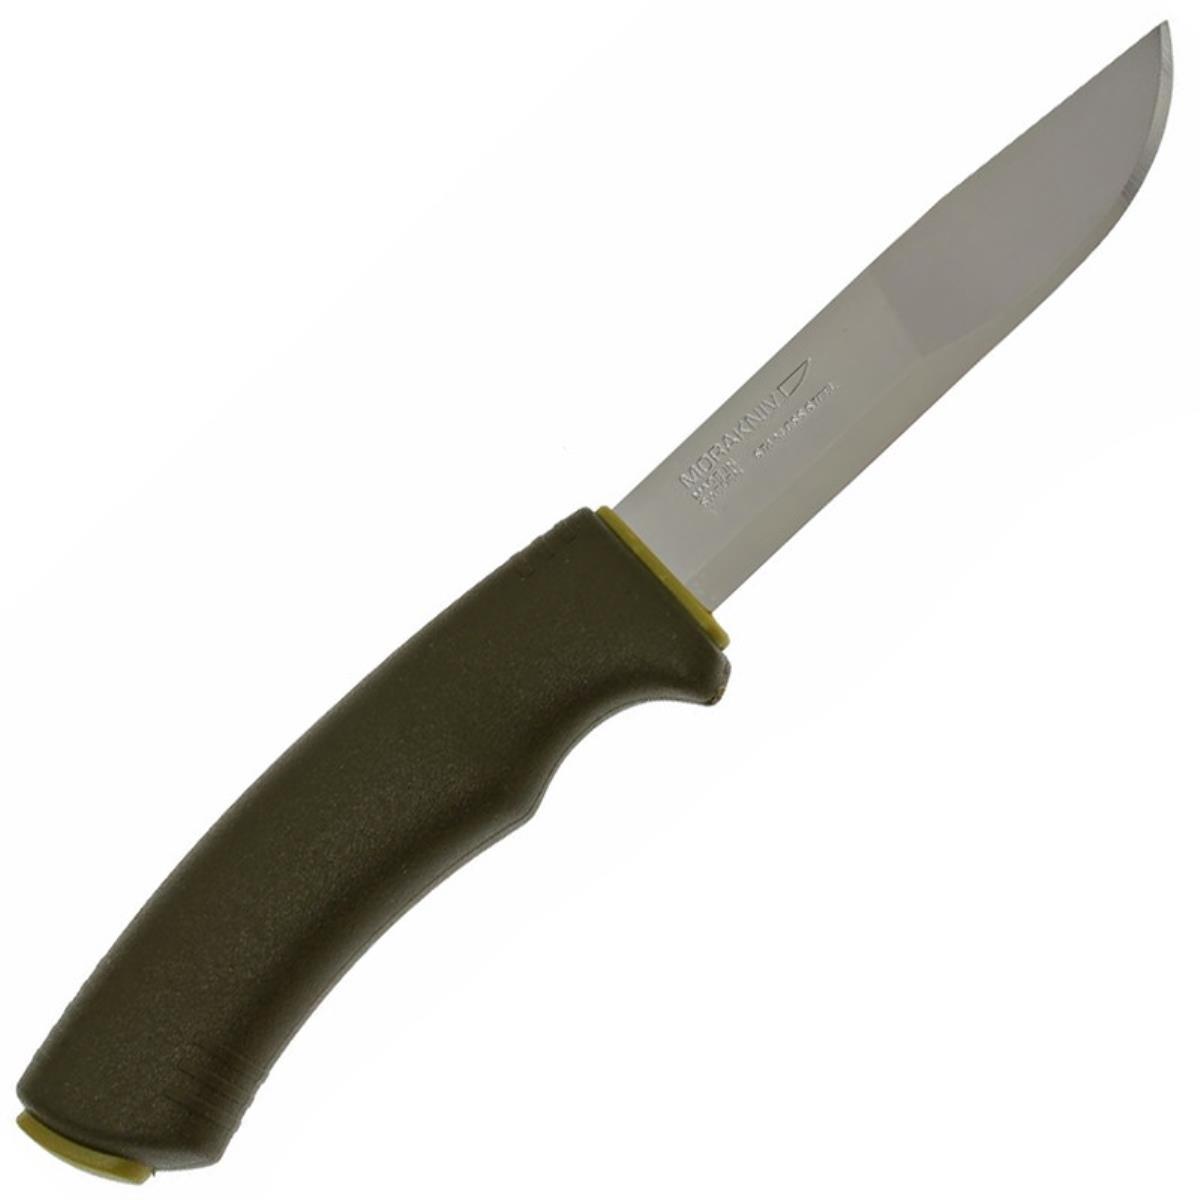 Нож Knife BuchCraft Forest 12493 Morakniv нож с фиксированным лезвием morakniv bushcraft forest сталь sandvik 12c27 ручка резина пластик